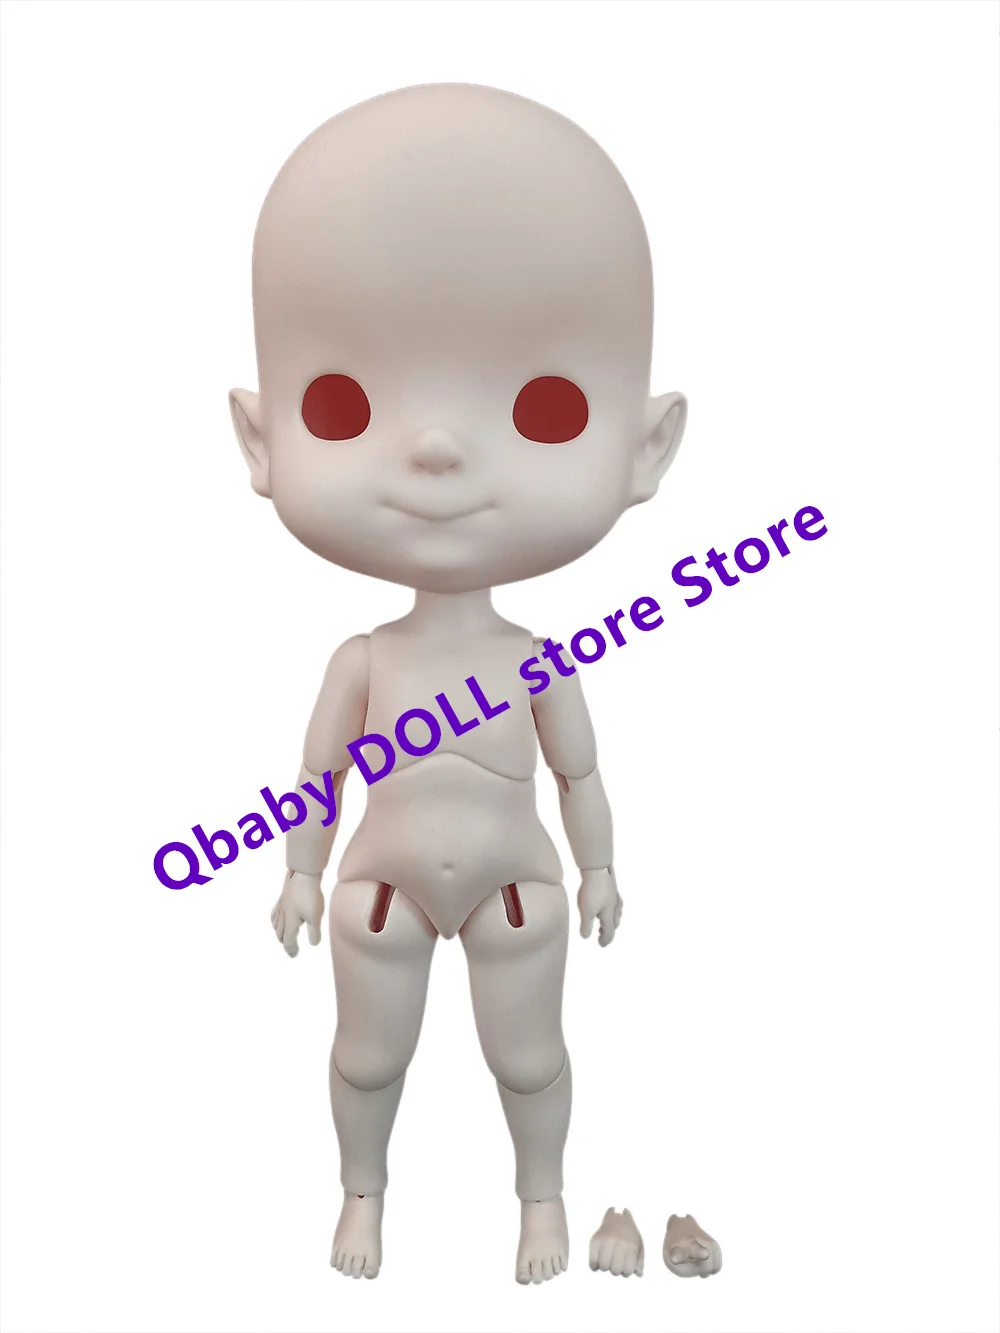 

Qbaby Doll store 1 / 6 regalo de juguete de resina para cintura perezosa